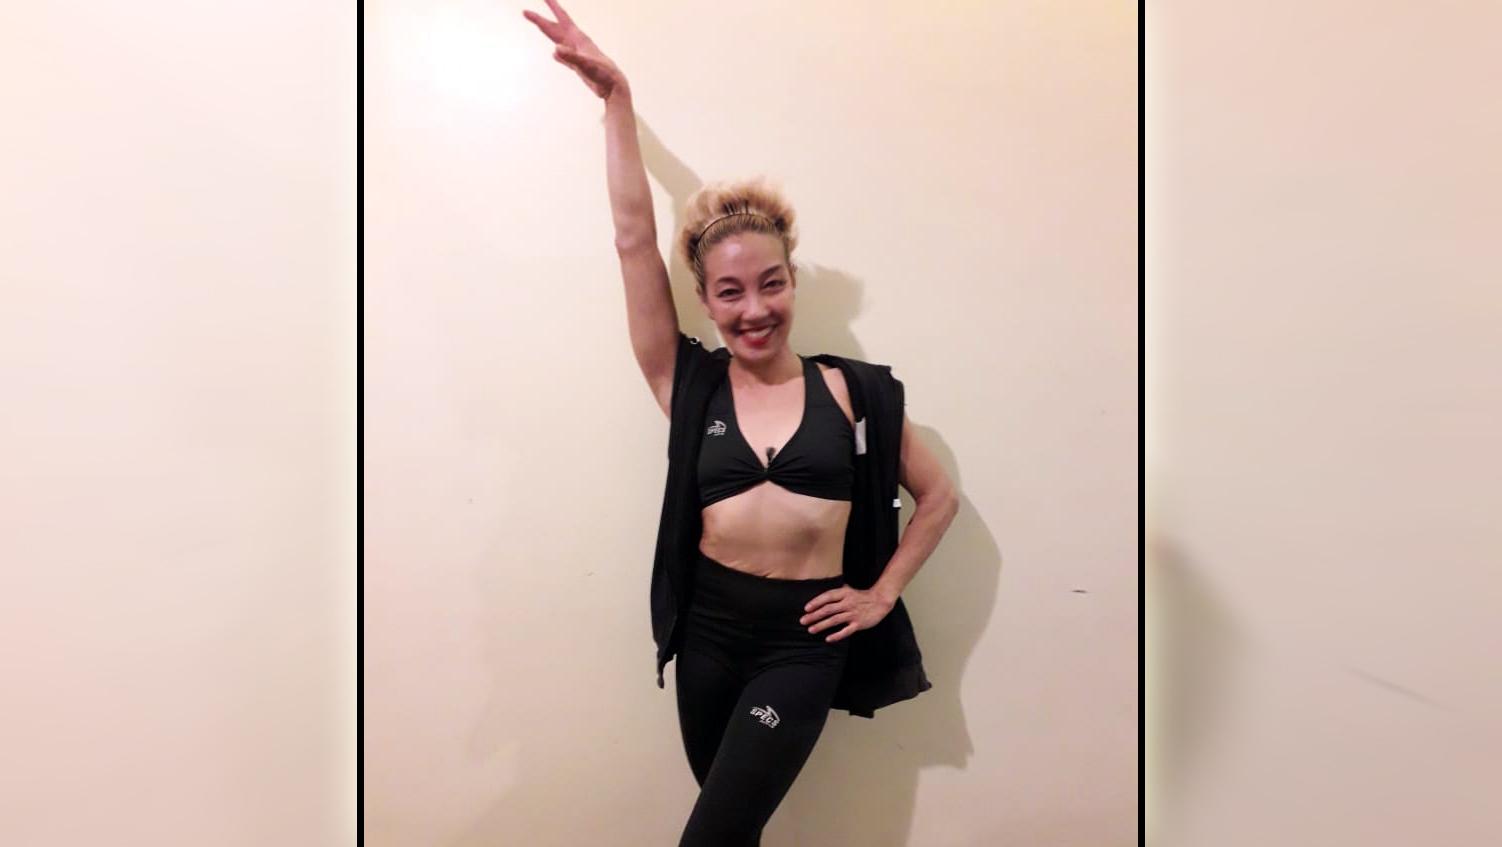 Sebagai instruktur senam aerobic, artis senior Vicky Burki dikira masih ABG saat lincah memamerkan kepiawiannya melakukan tarian tiang atau pole dance. - INDOSPORT